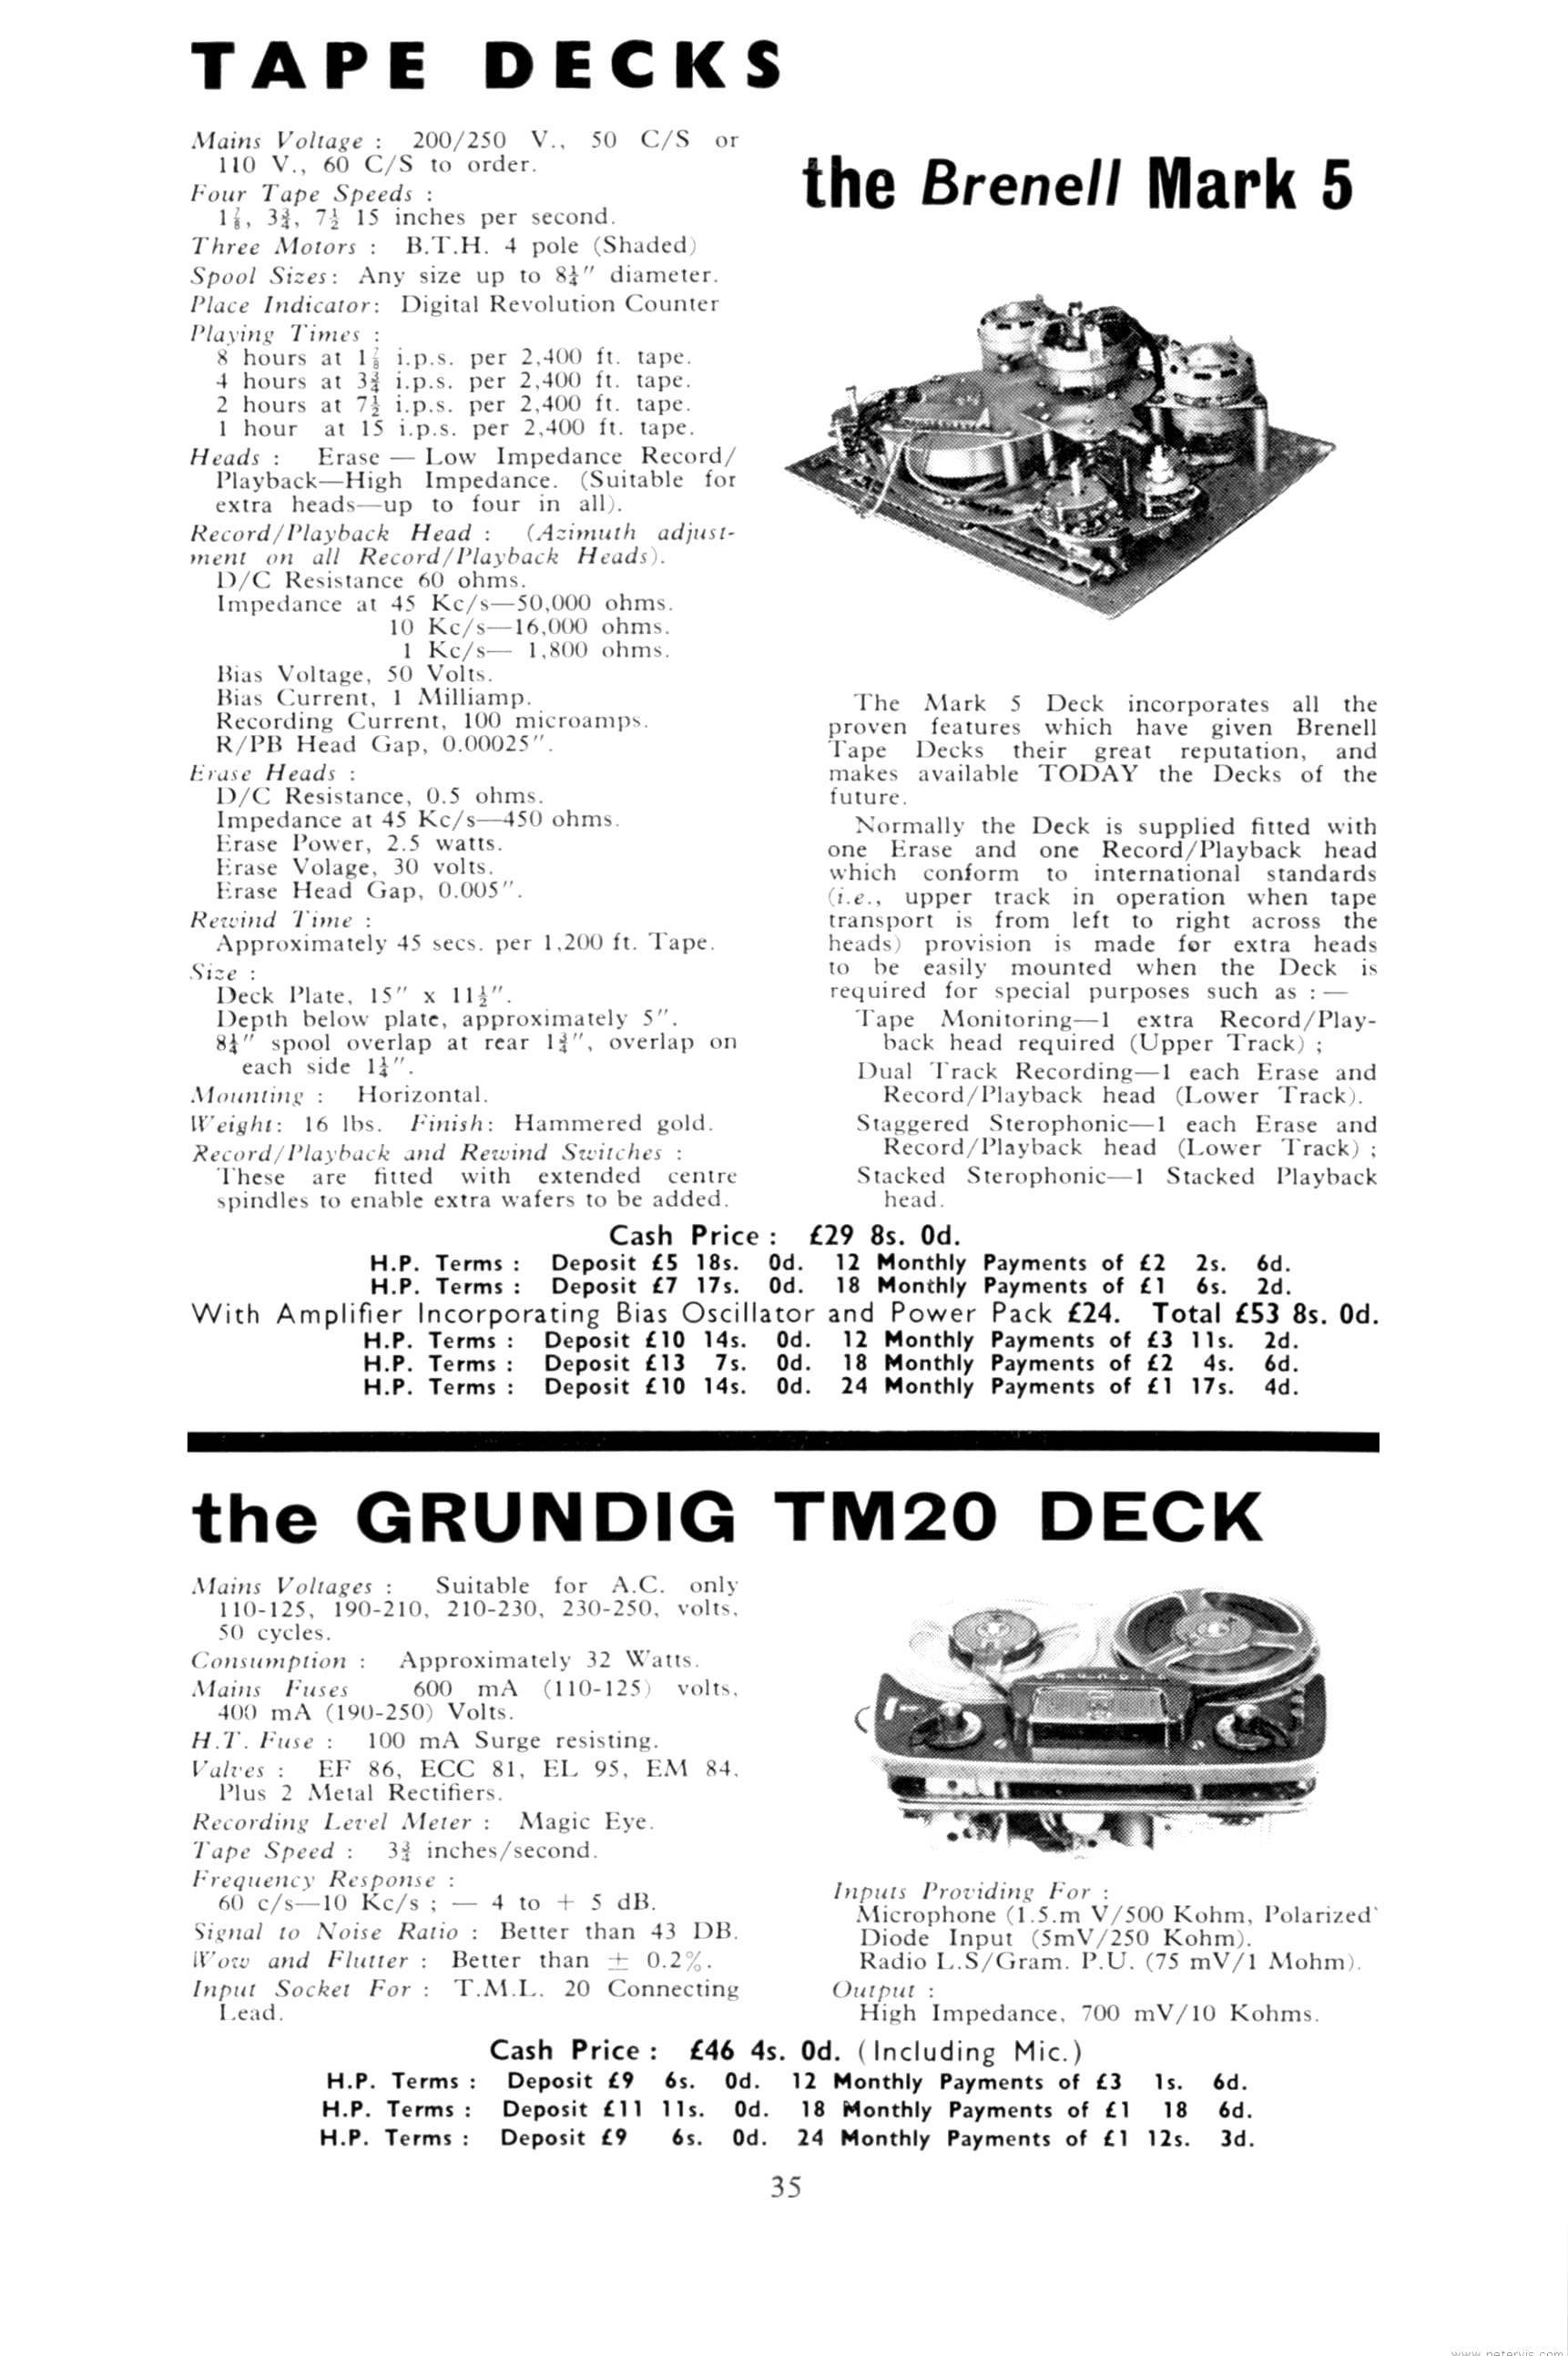 Brenell and Grundig Decks